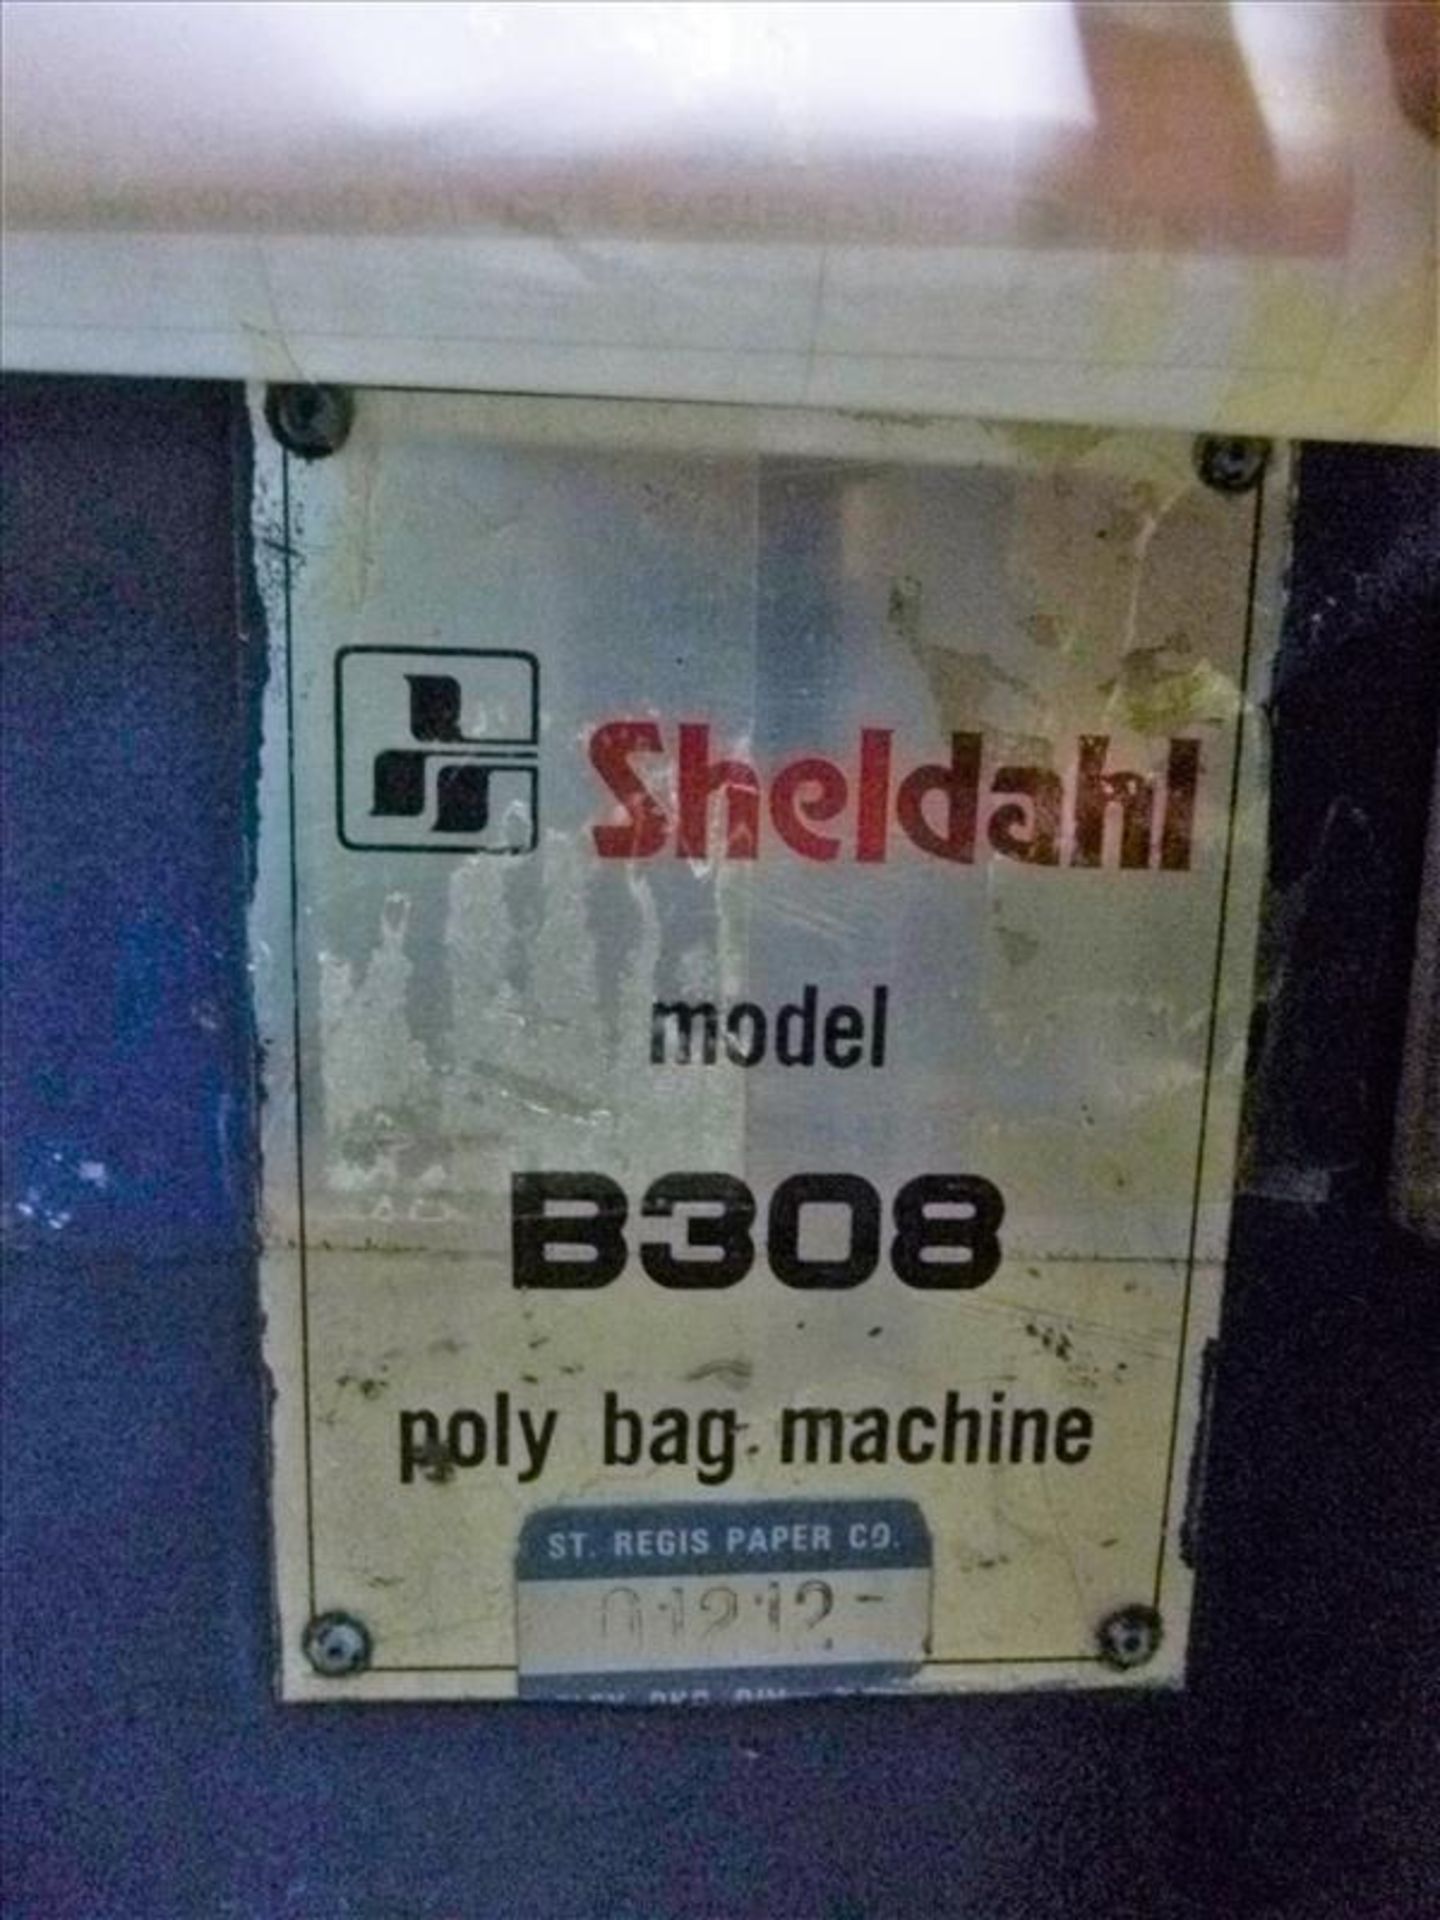 Sheldahl 56" side-weld poly bag machine, model B308, type 56T, ser. no. GS-2913, code no.17623-00, - Image 4 of 4